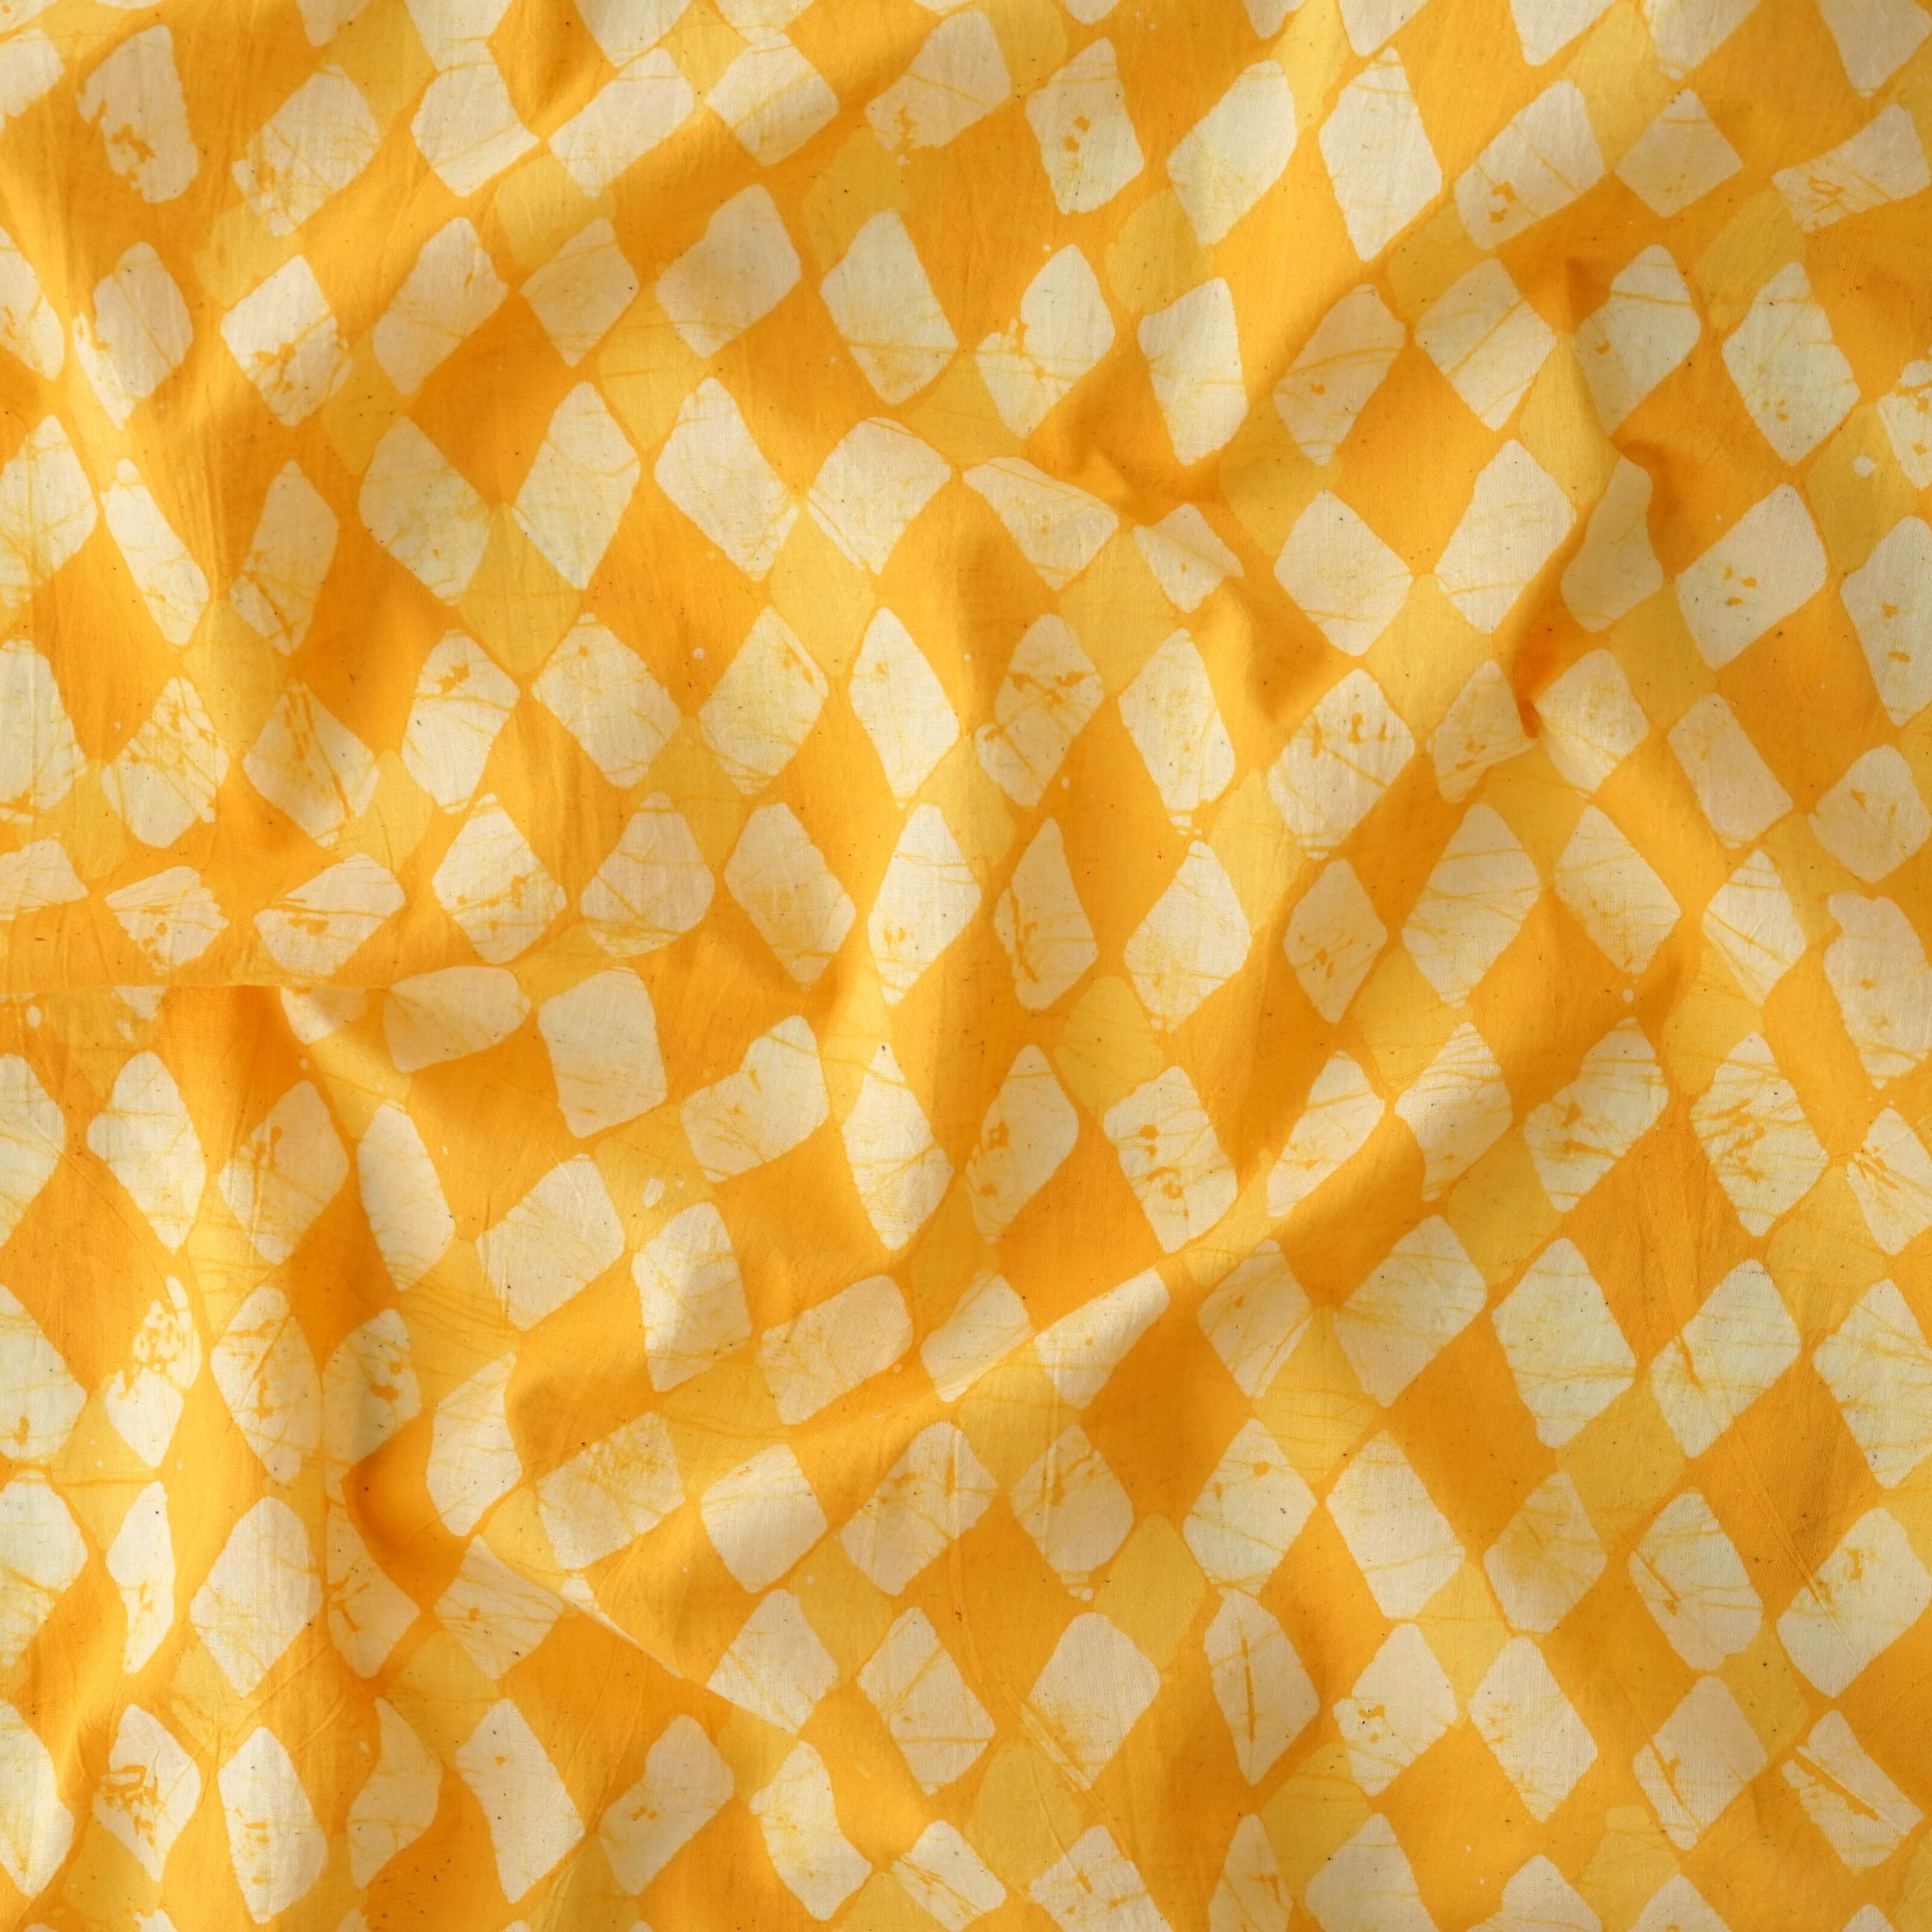 100% Block-Printed Batik Cotton Fabric From India - Modernista Design - Yellow Dye - Contrast